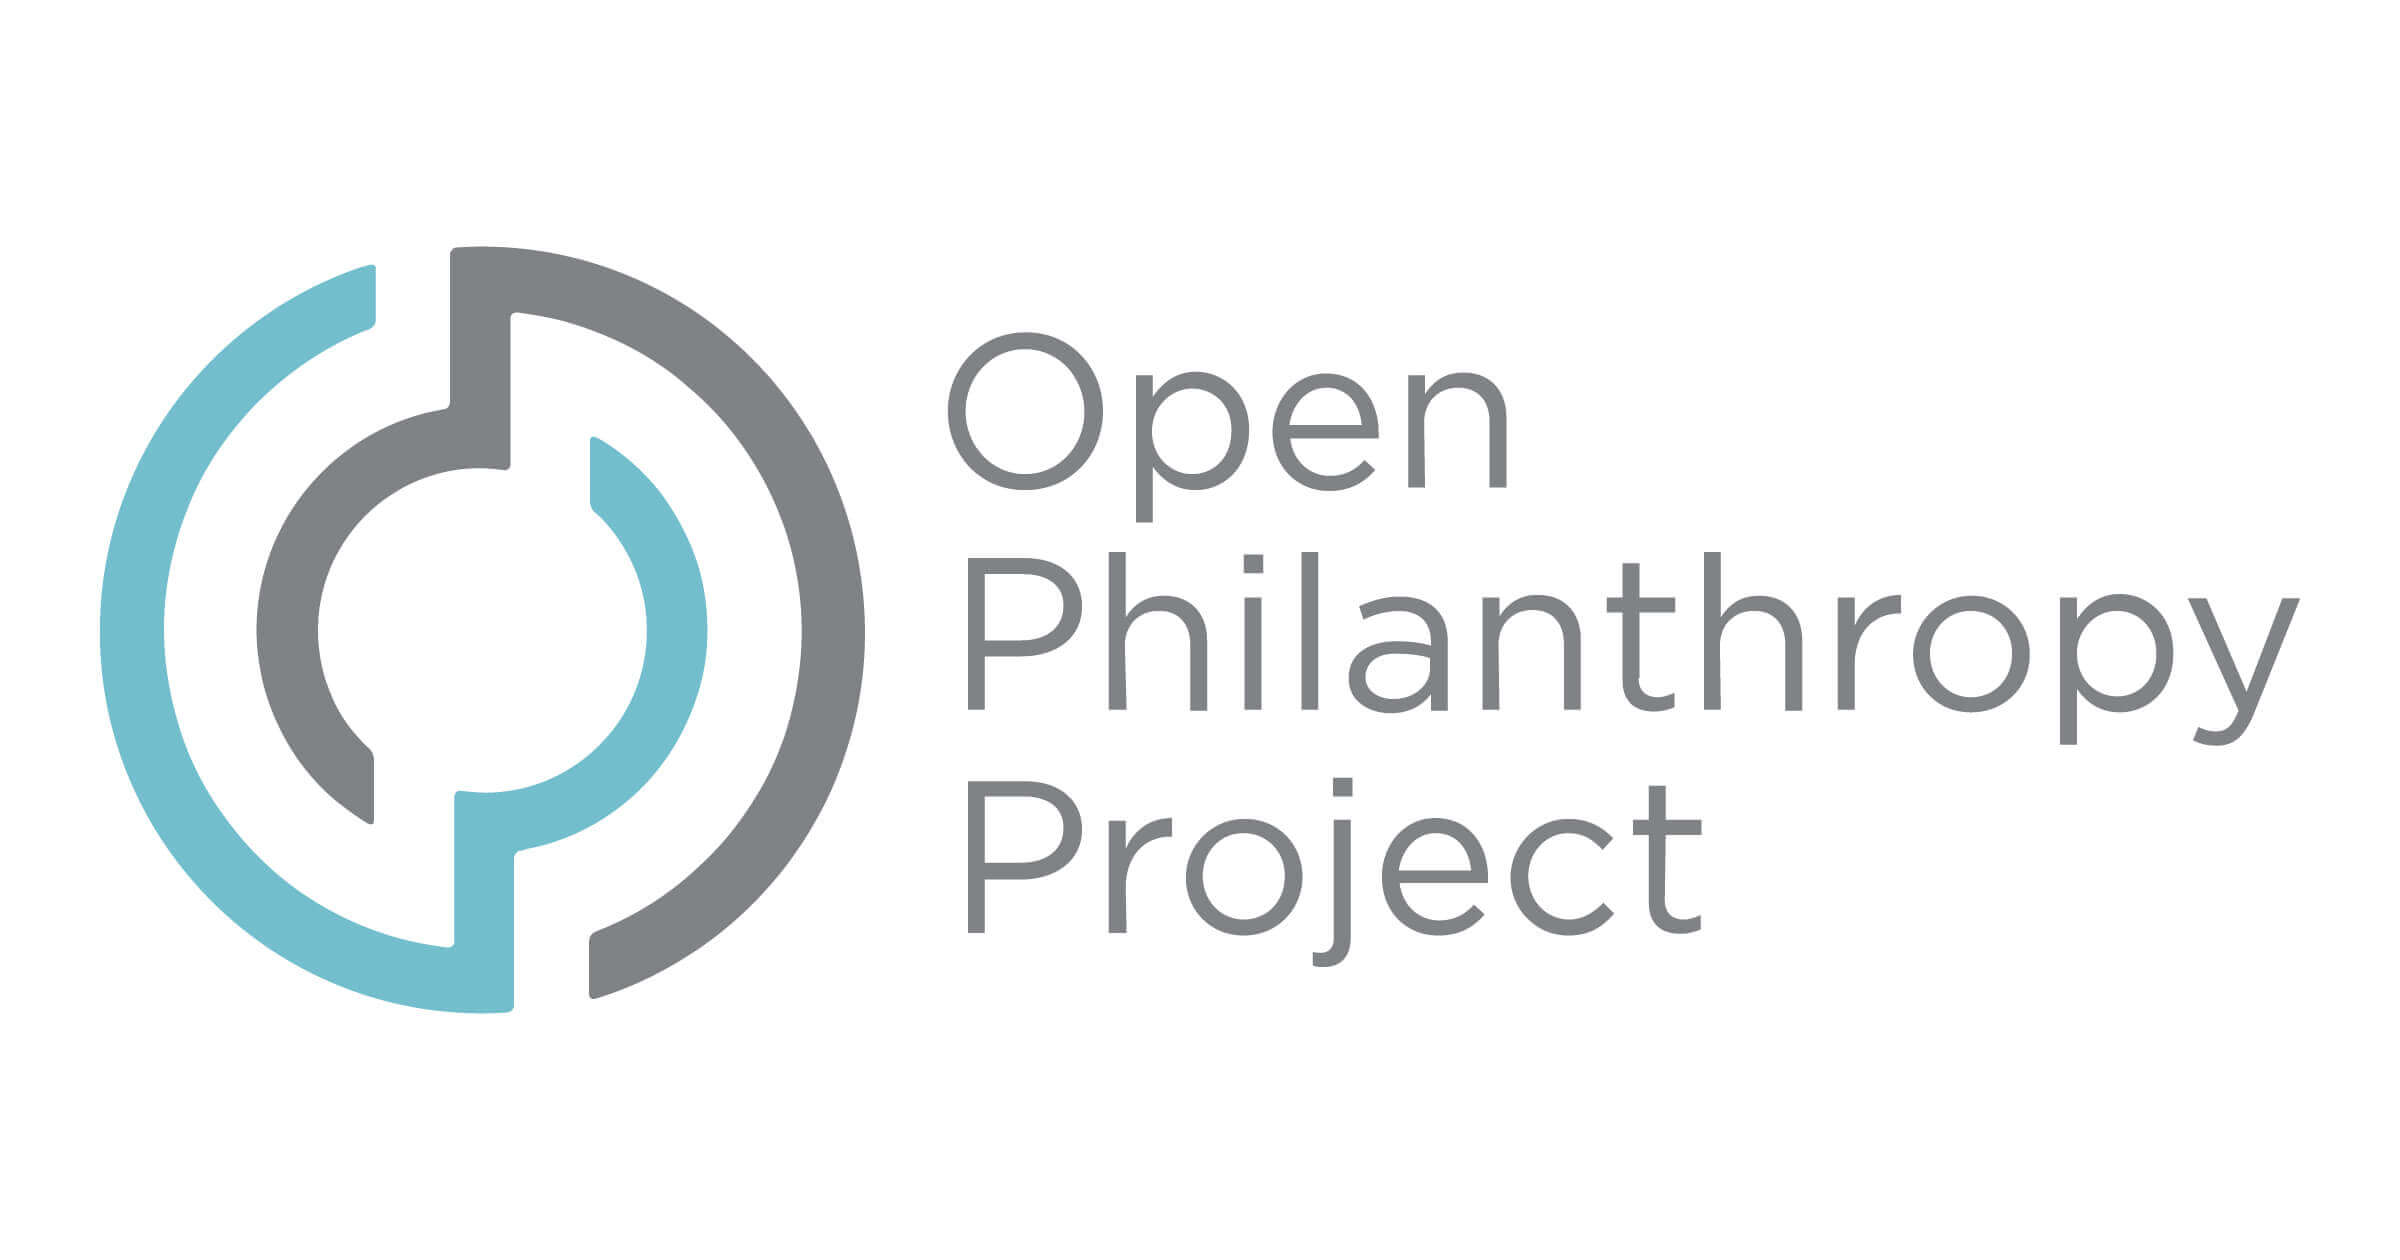 Open Philanthropy Project